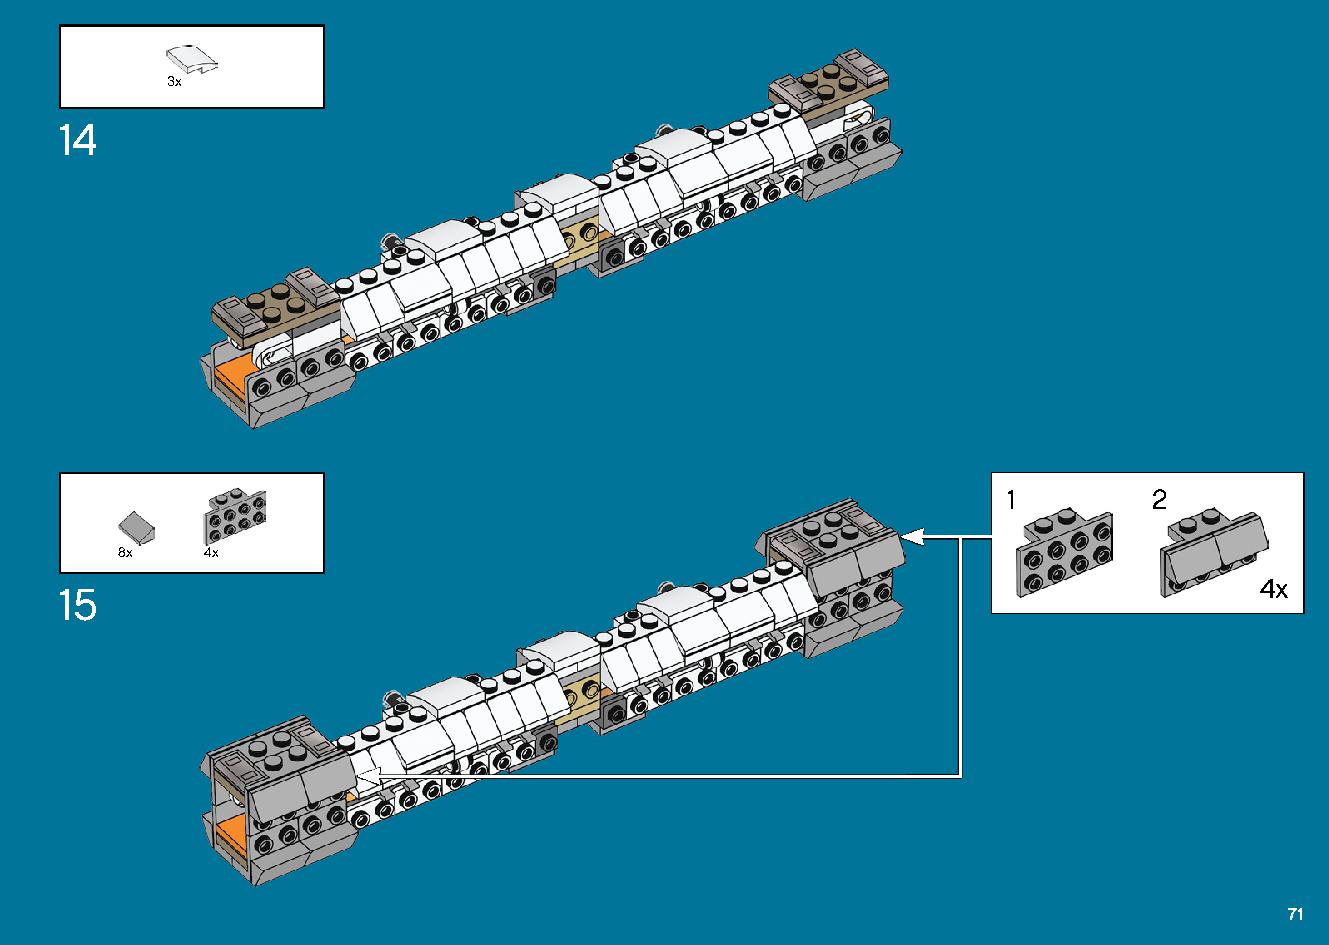 International Space Station 21321 レゴの商品情報 レゴの説明書・組立方法 71 page